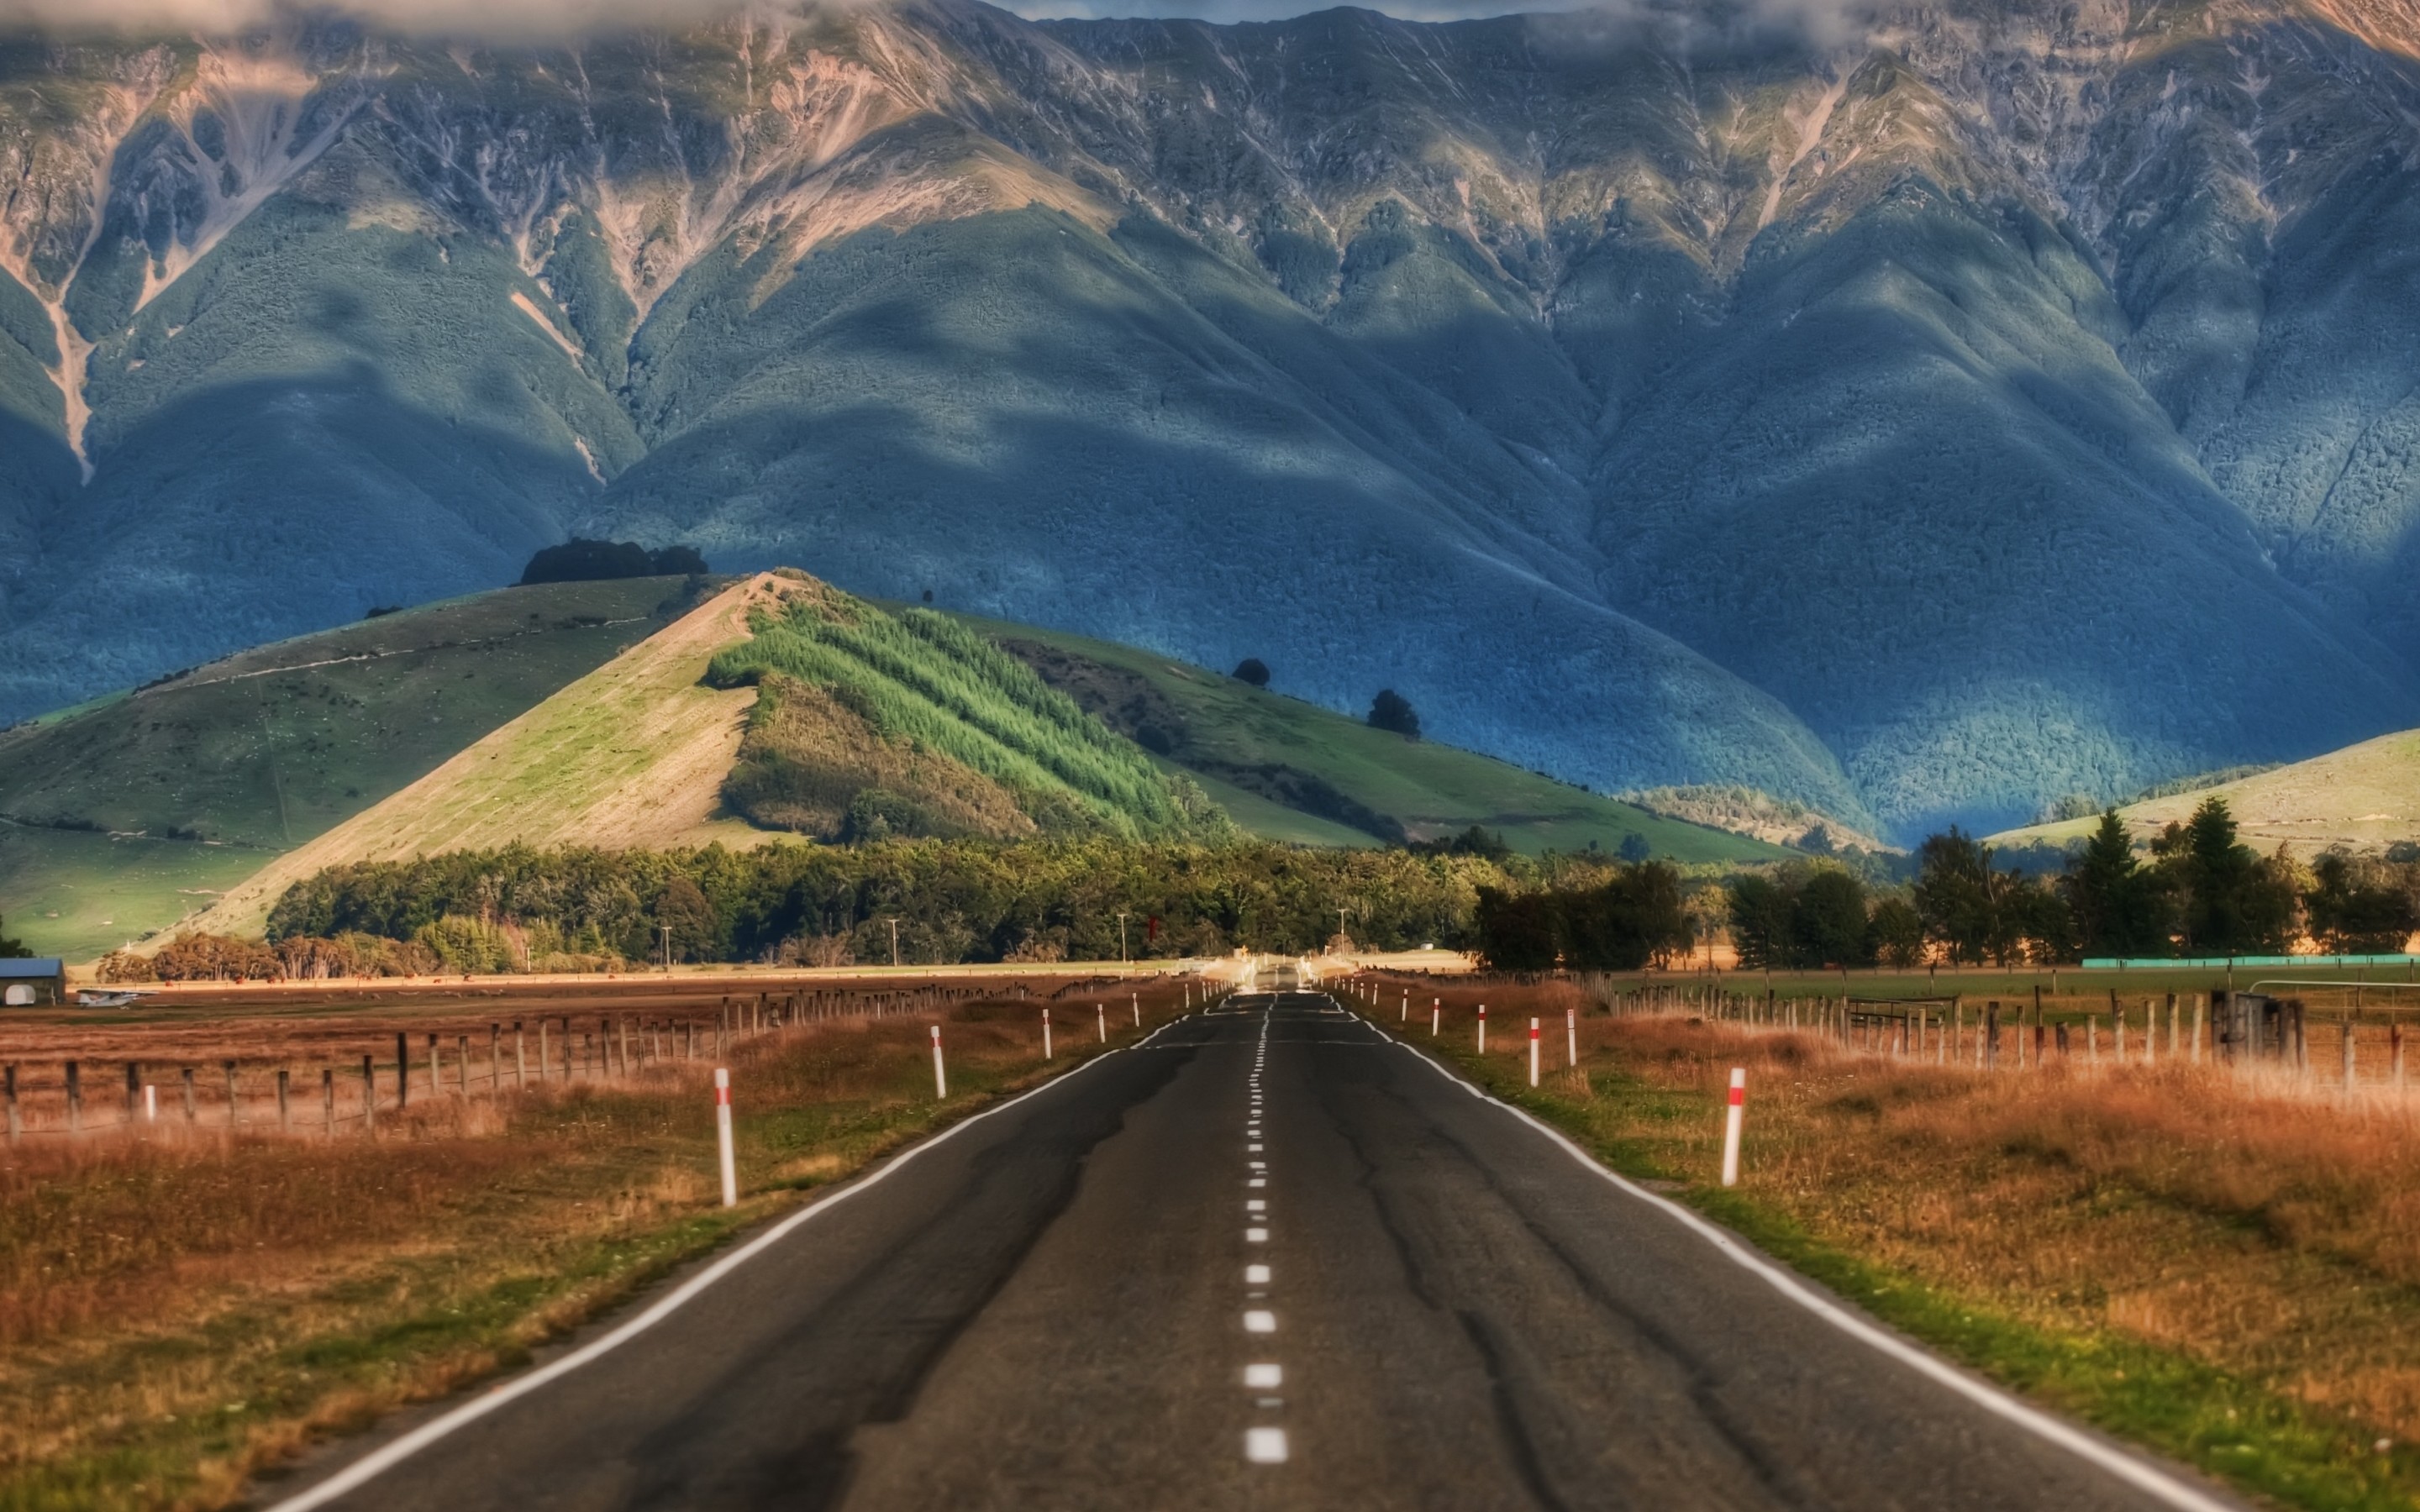 macbook pro retina wallpaper 2880x1800,mountainous landforms,highland,road,natural landscape,nature